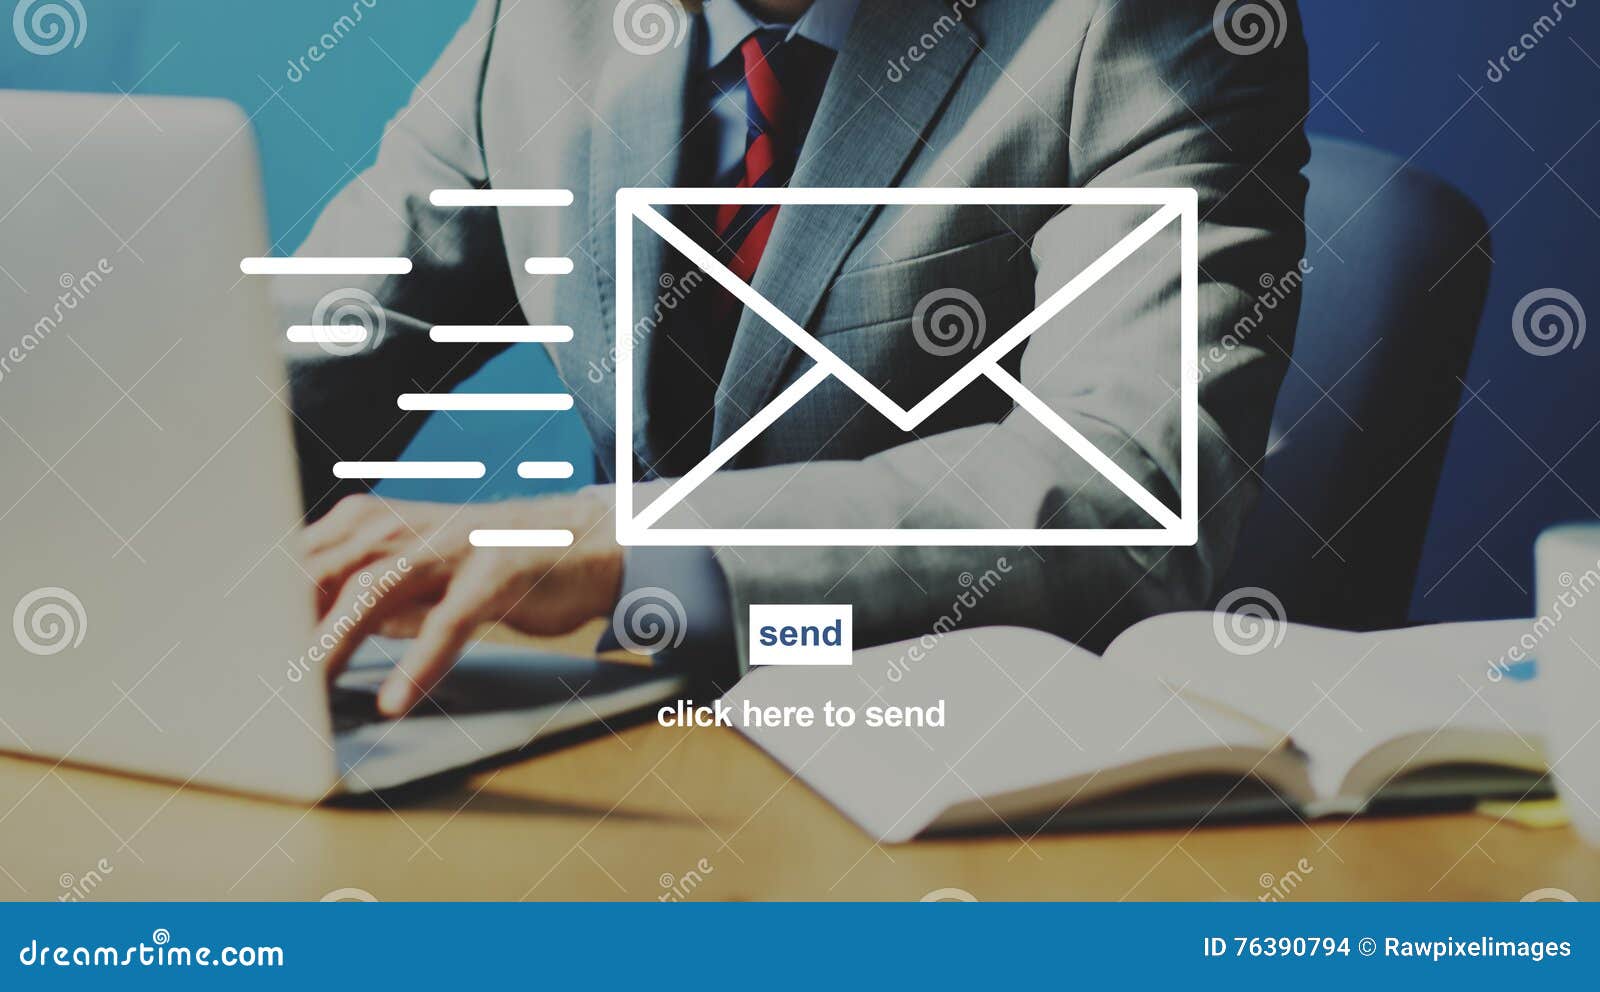 email communication correspondance envelope concept